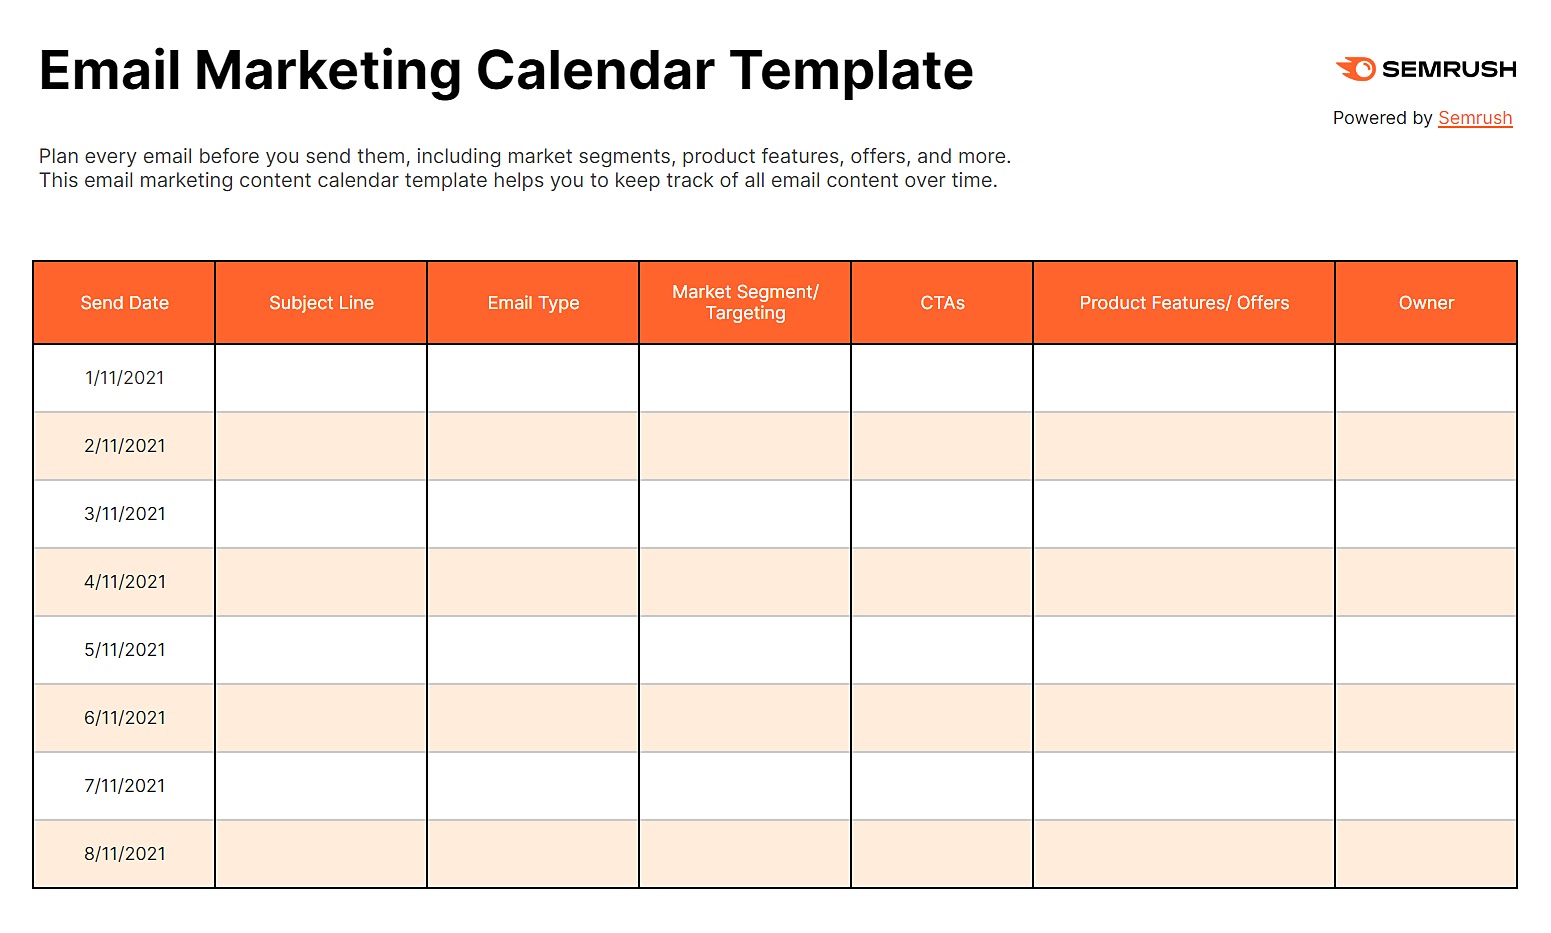 Email marketing calendar template by Semrush